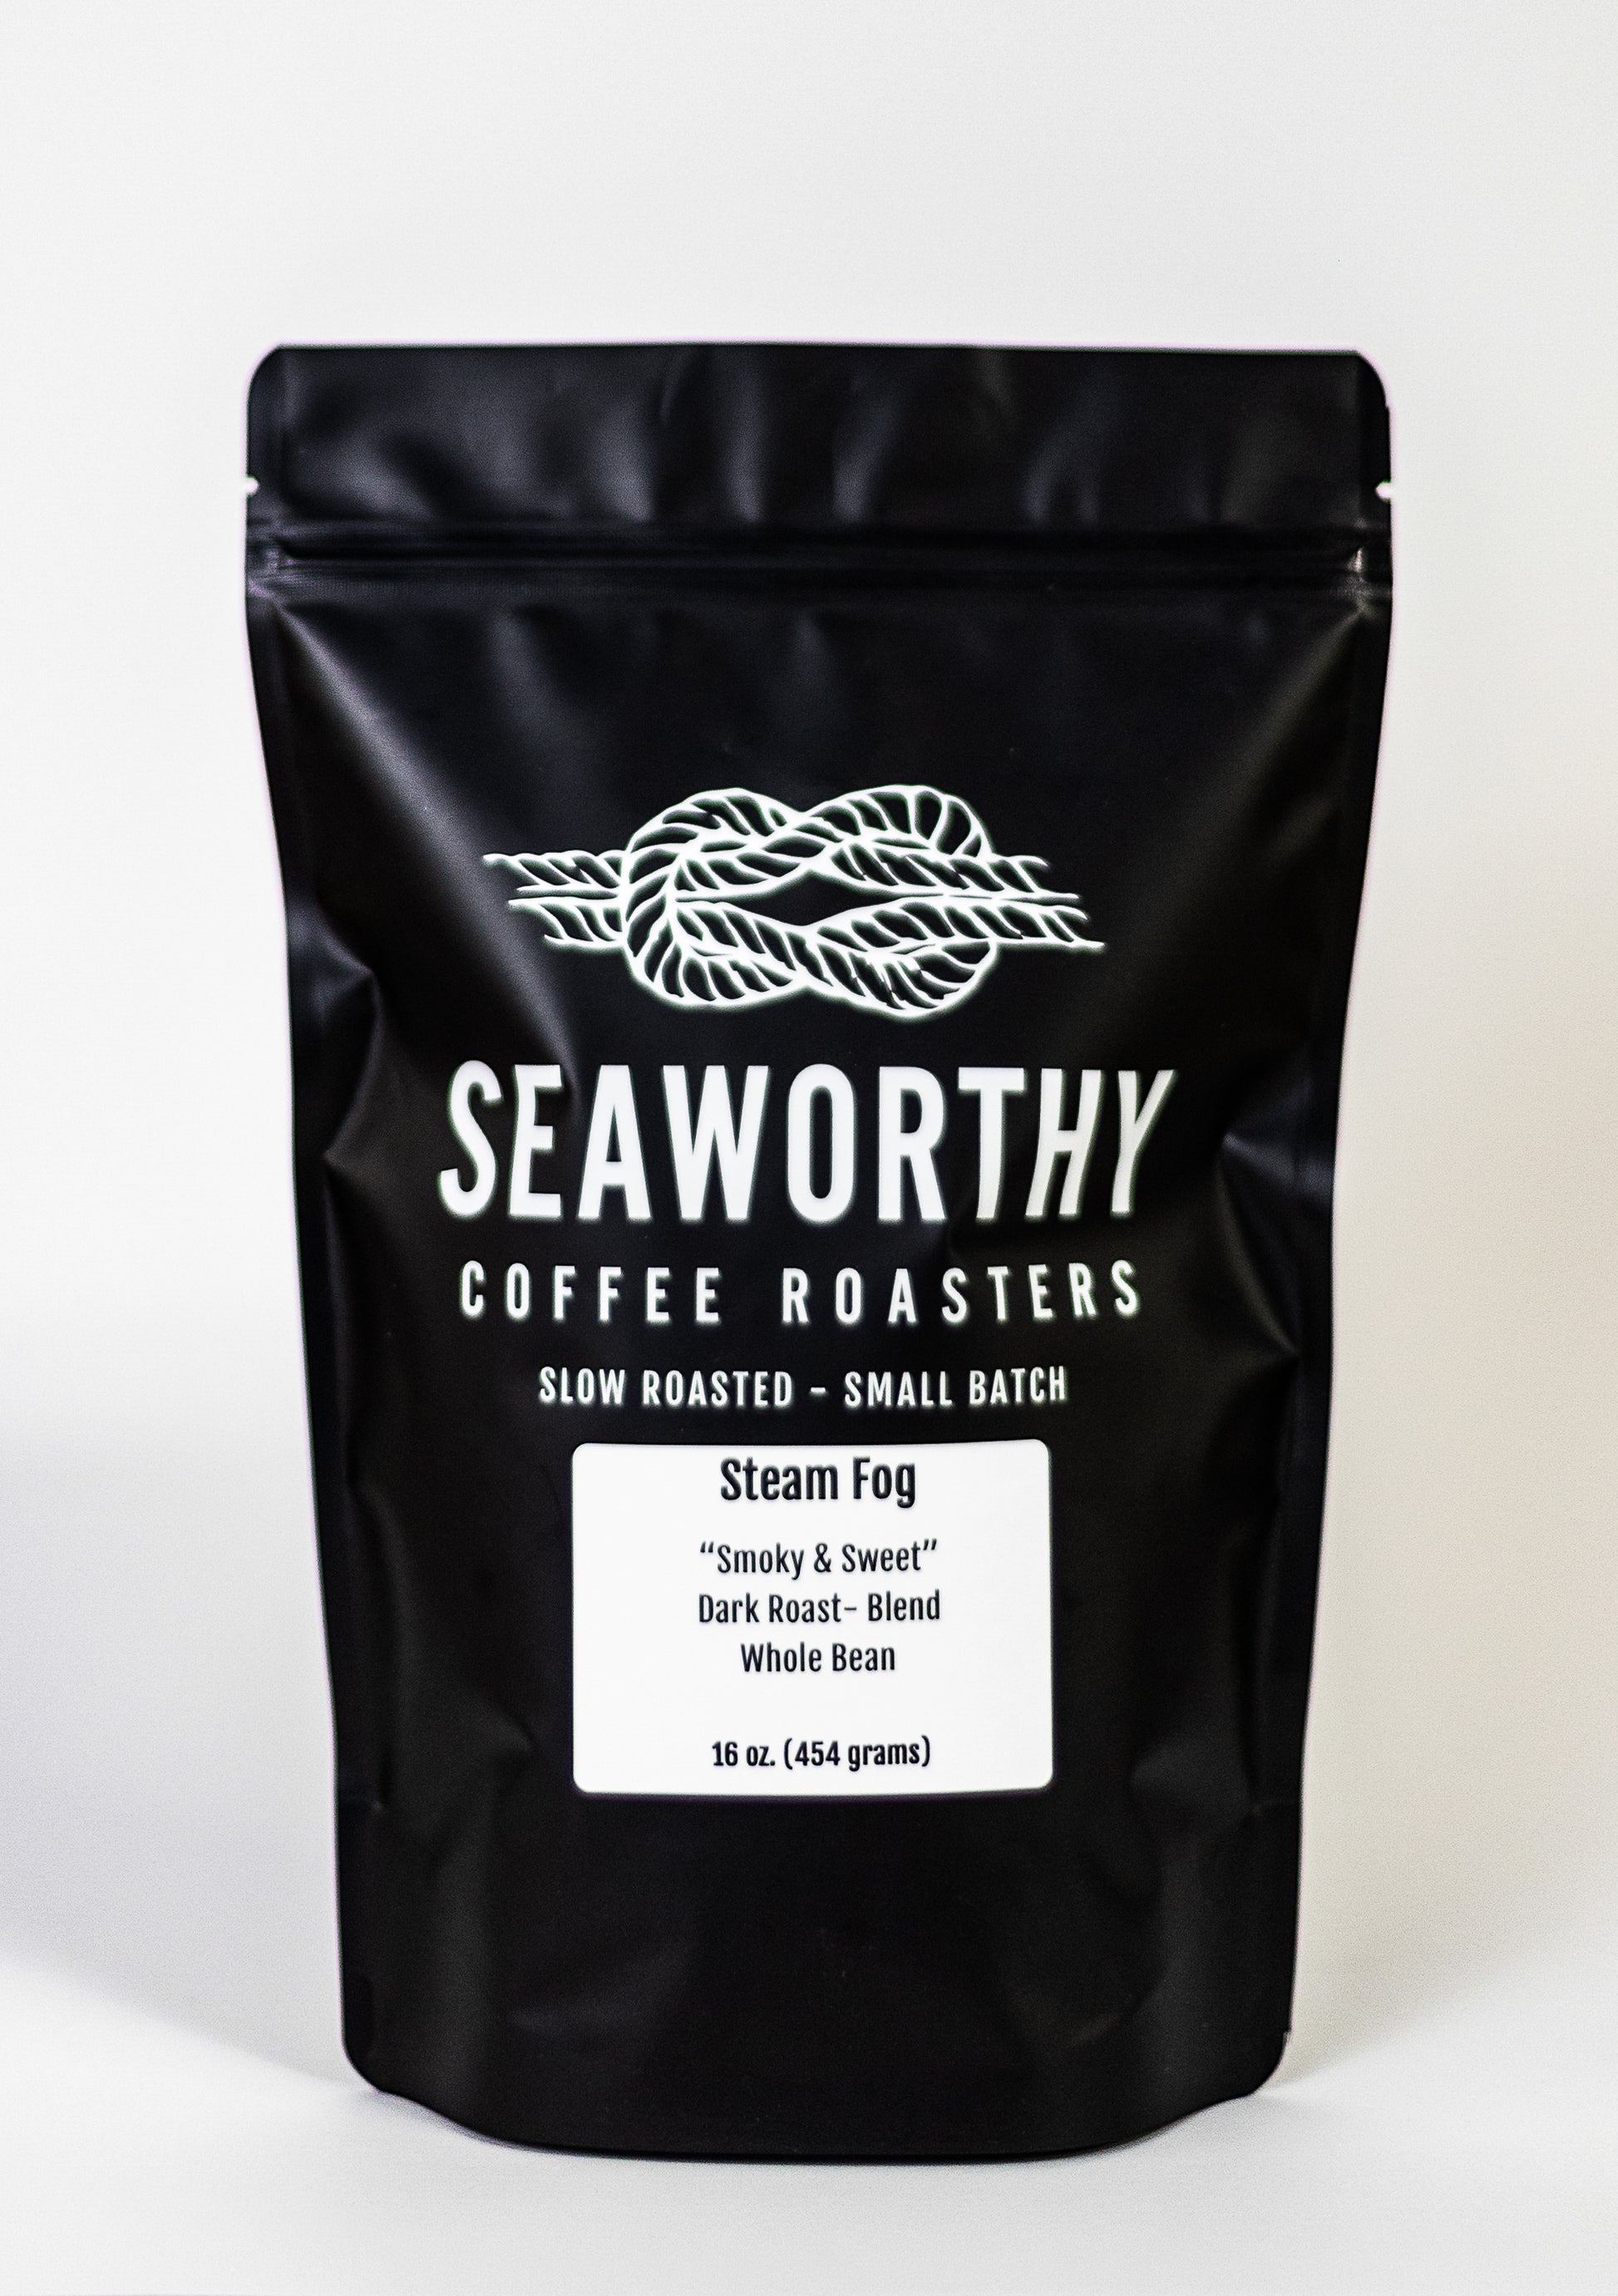 Seaworthy slow roasted, small batch, low acid coffee. 1 pound bag of Steam Fog dark roast specialty coffee.